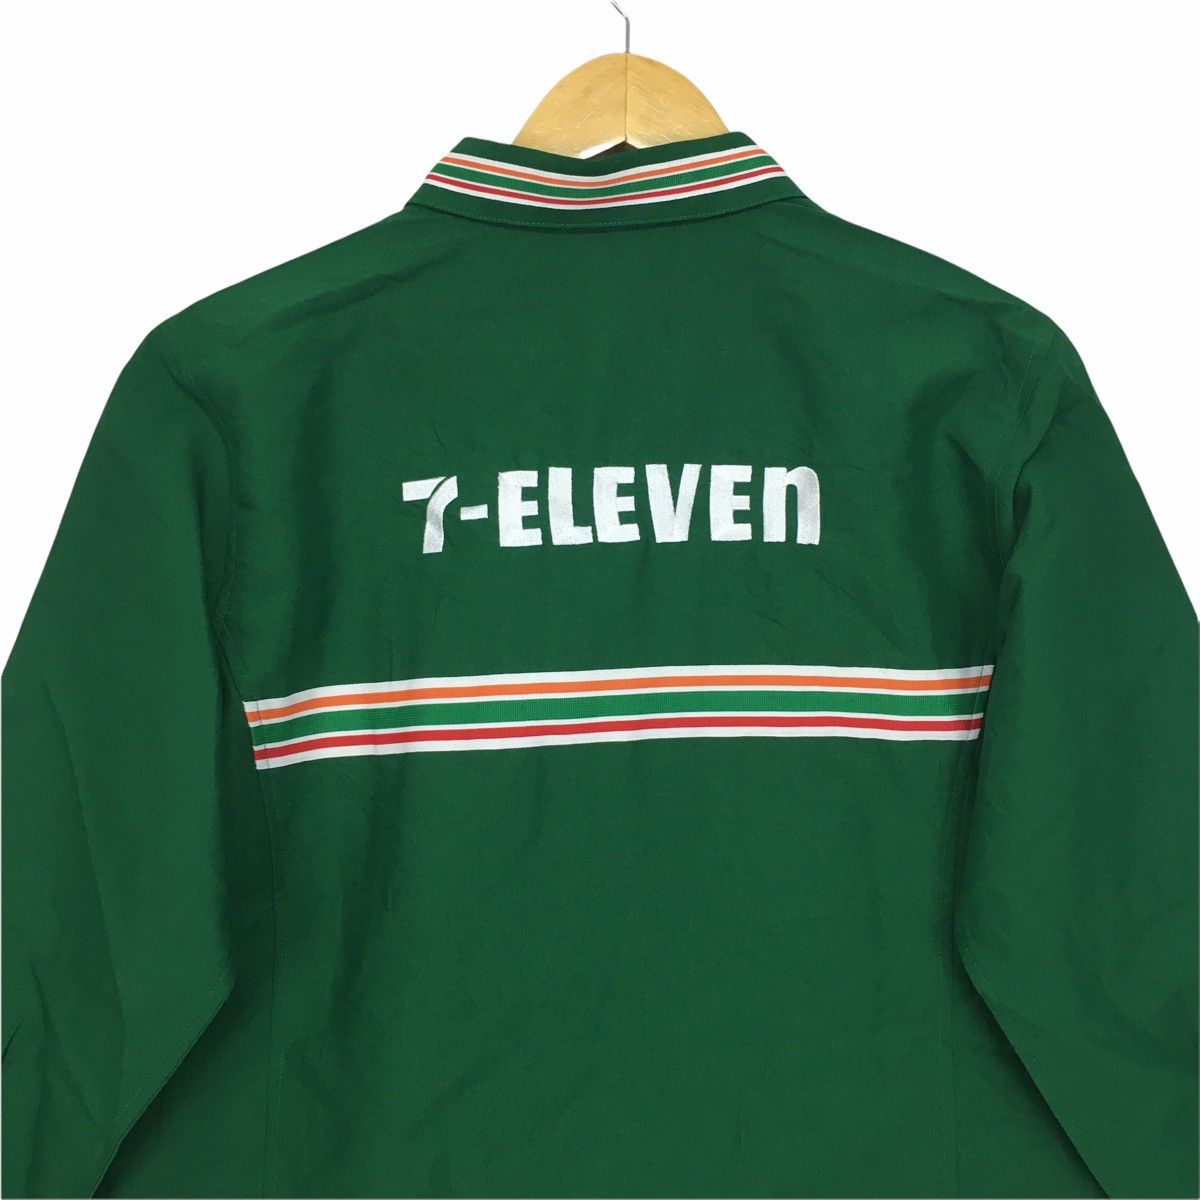 Vintage 7-ELEVEN Zip Up Shirt Spell Out 7 Eleven Worker Uniform Size US M / EU 48-50 / 2 - 7 Thumbnail